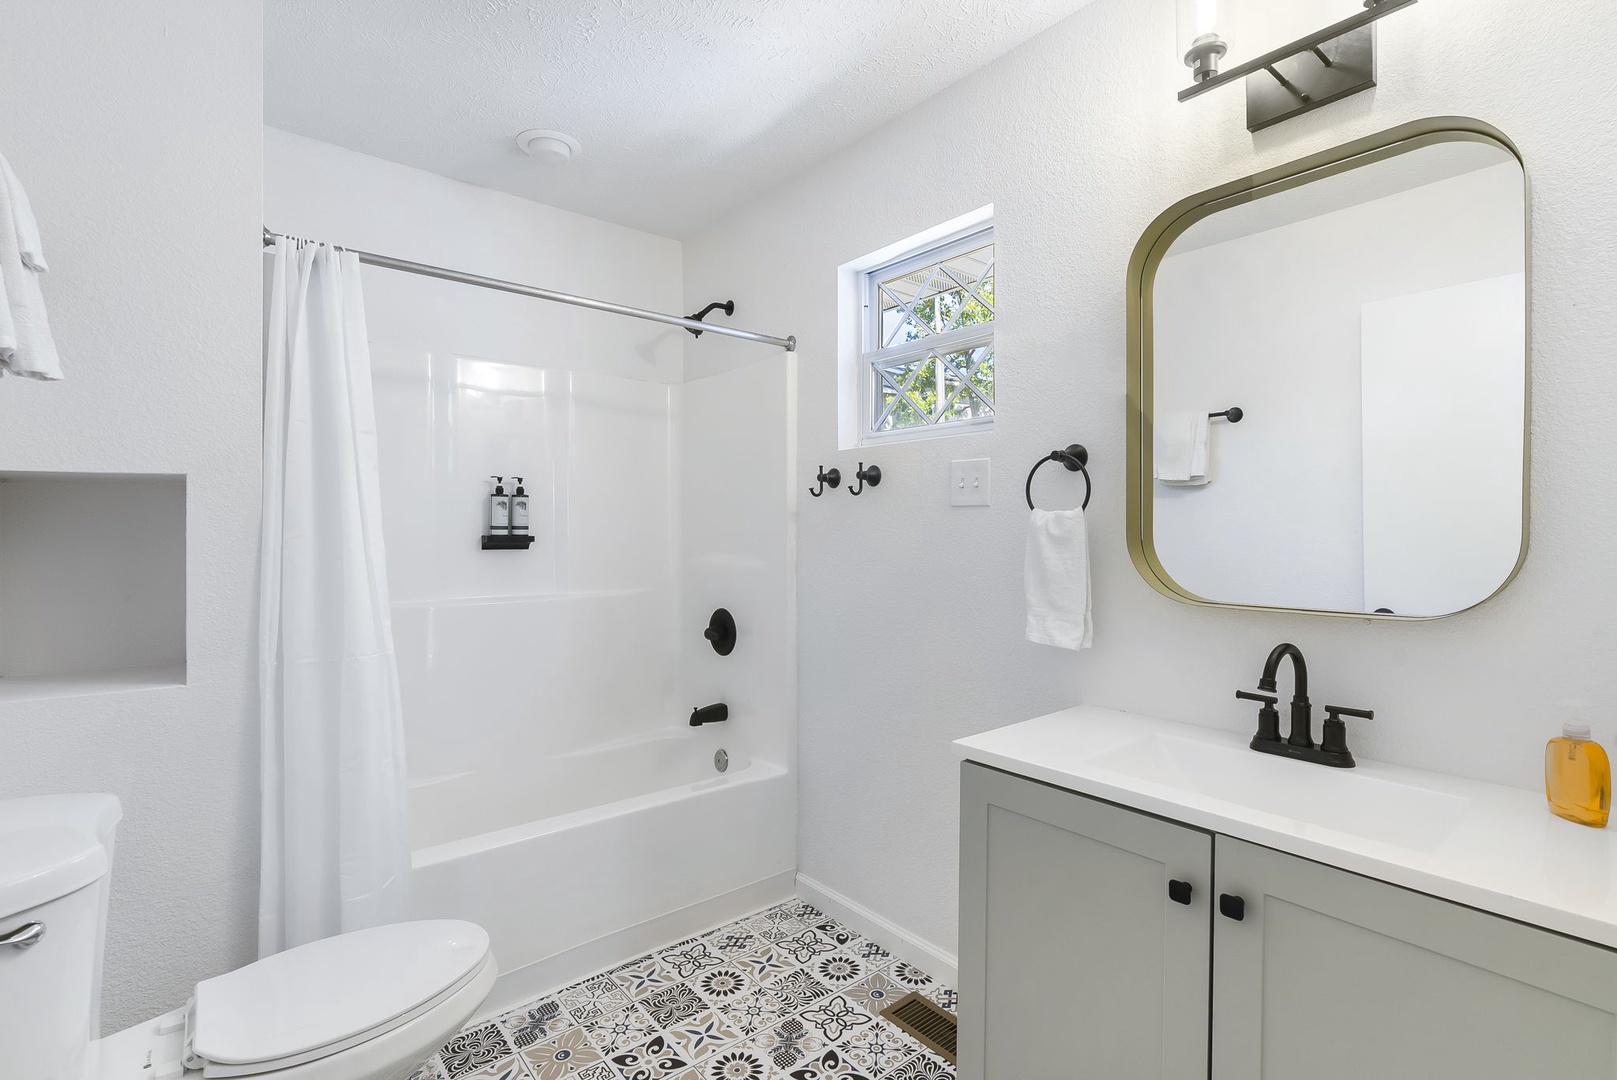 This 2nd floor en suite includes a single vanity & shower/tub combo